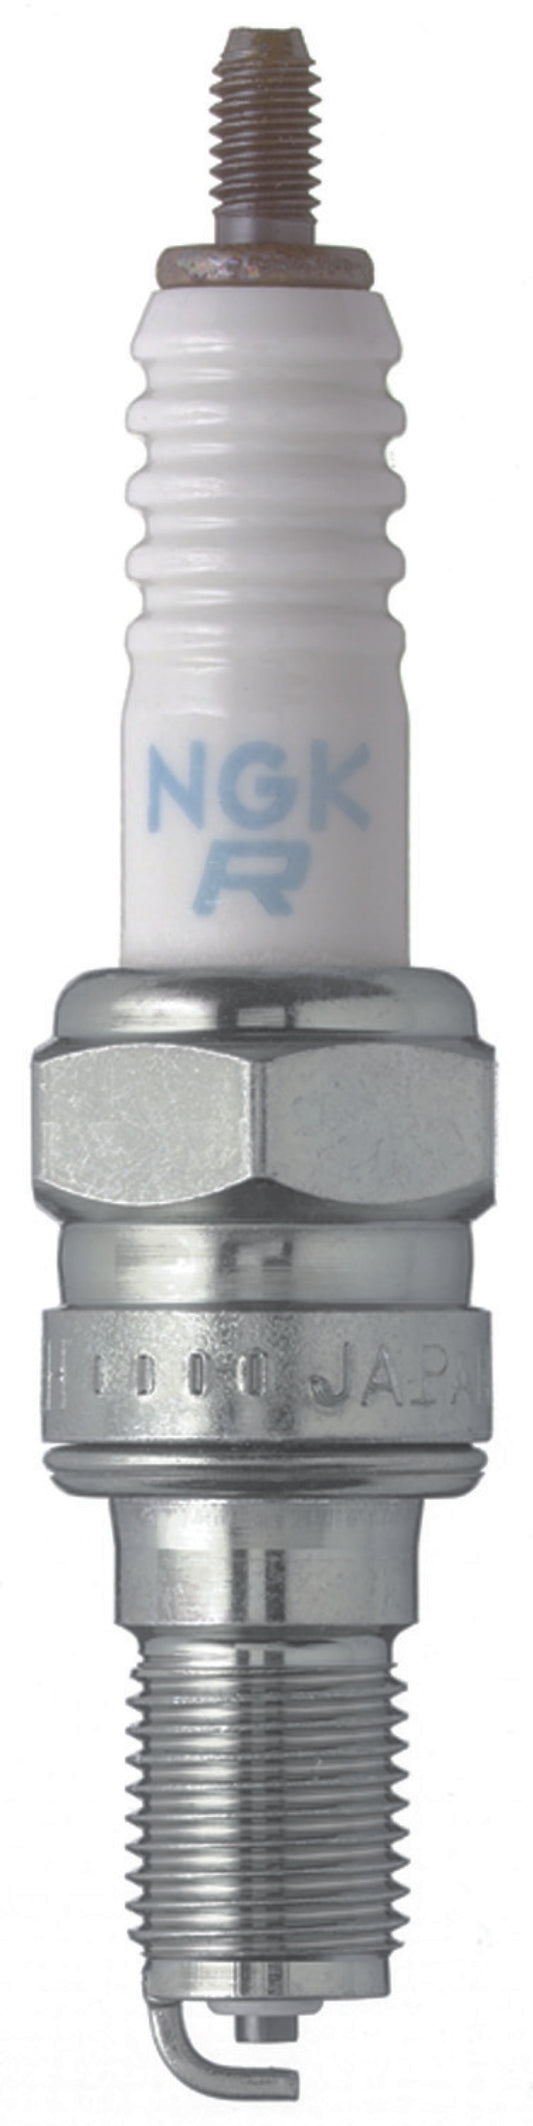 NGK Standard Spark Plug Box of 4 (CR8EH-9)